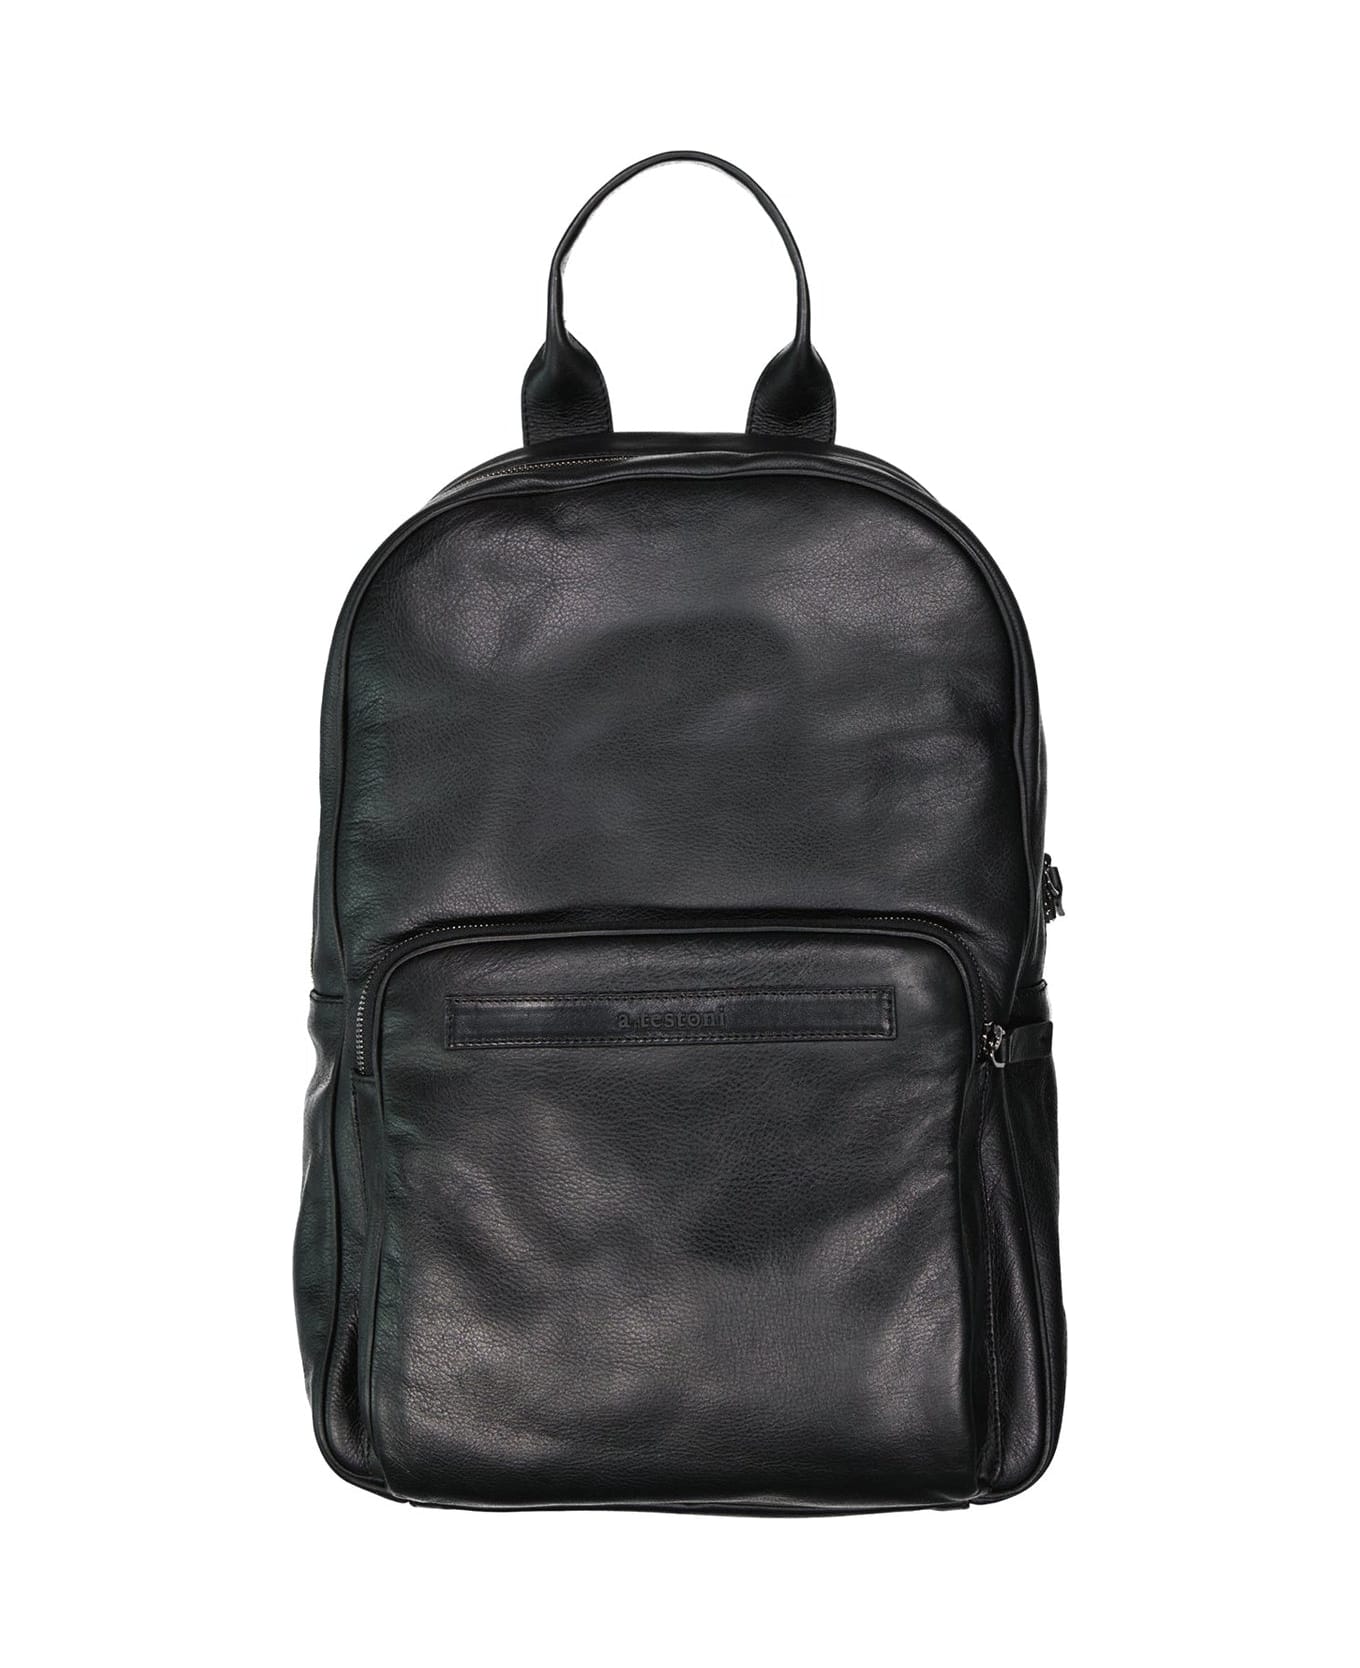 a.testoni Leather Backpack - Black